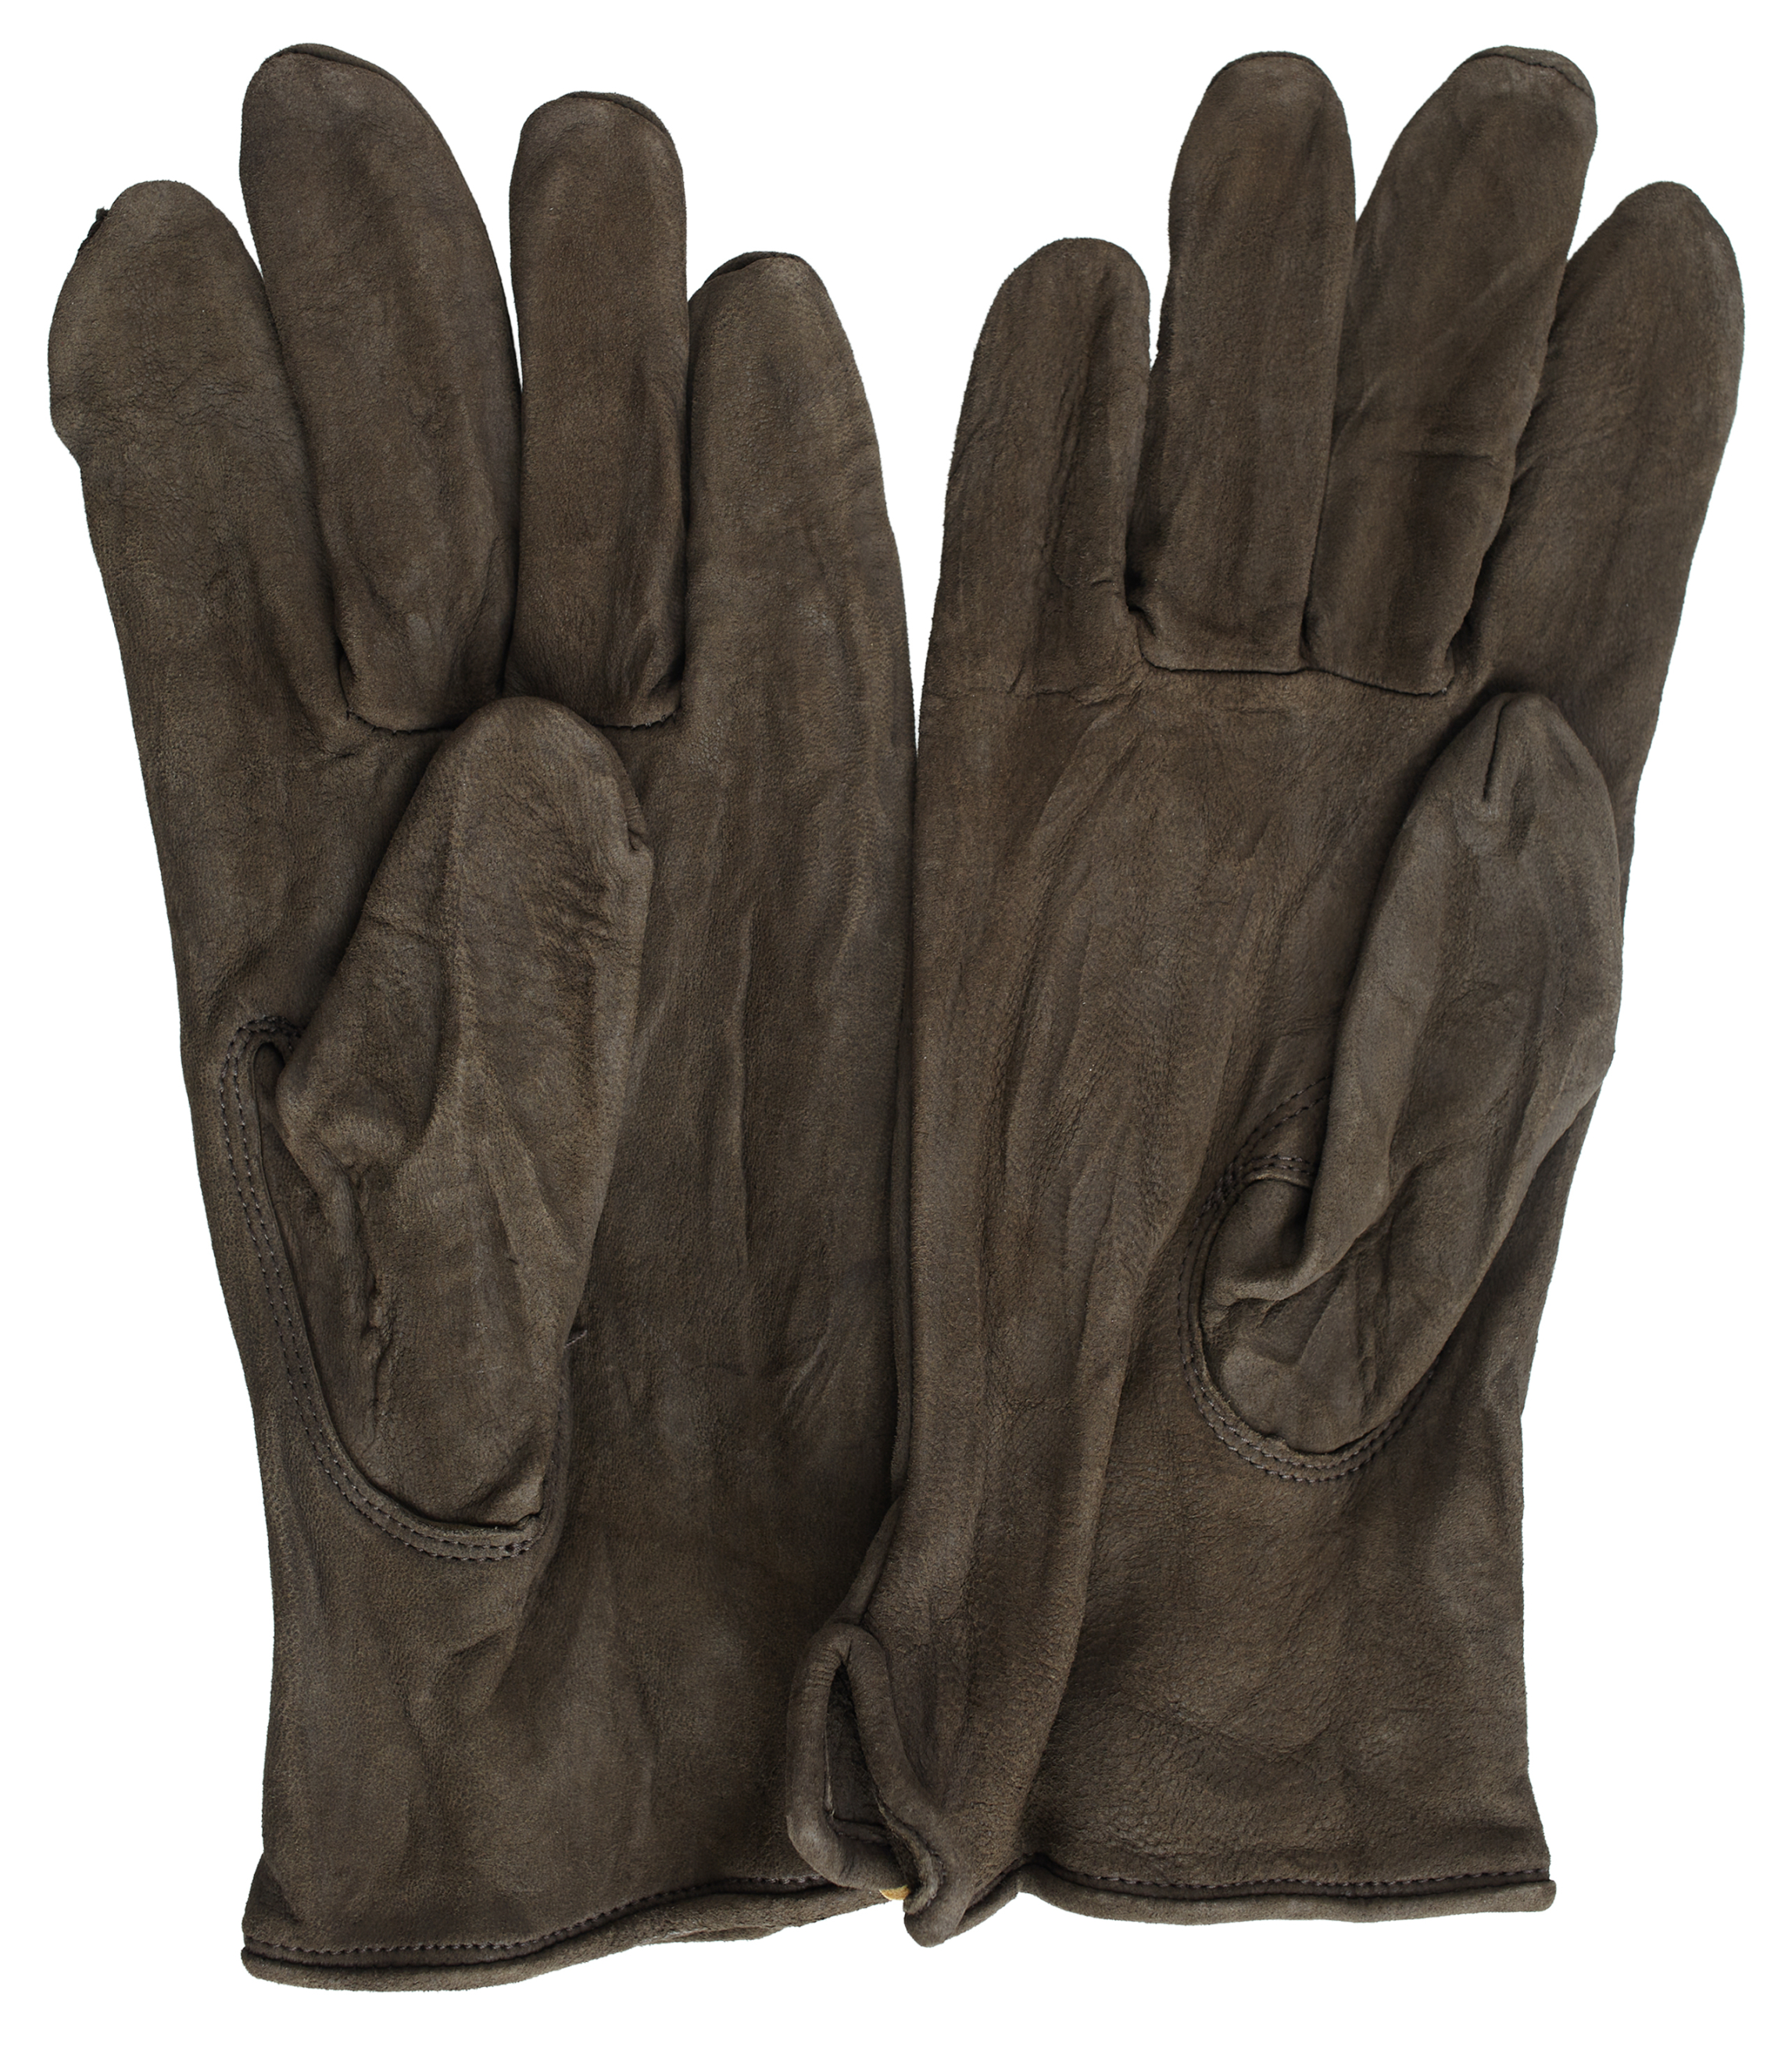 Коричневые замшевые перчатки visvim 0123203003008/DK.BROWN, размер M/L